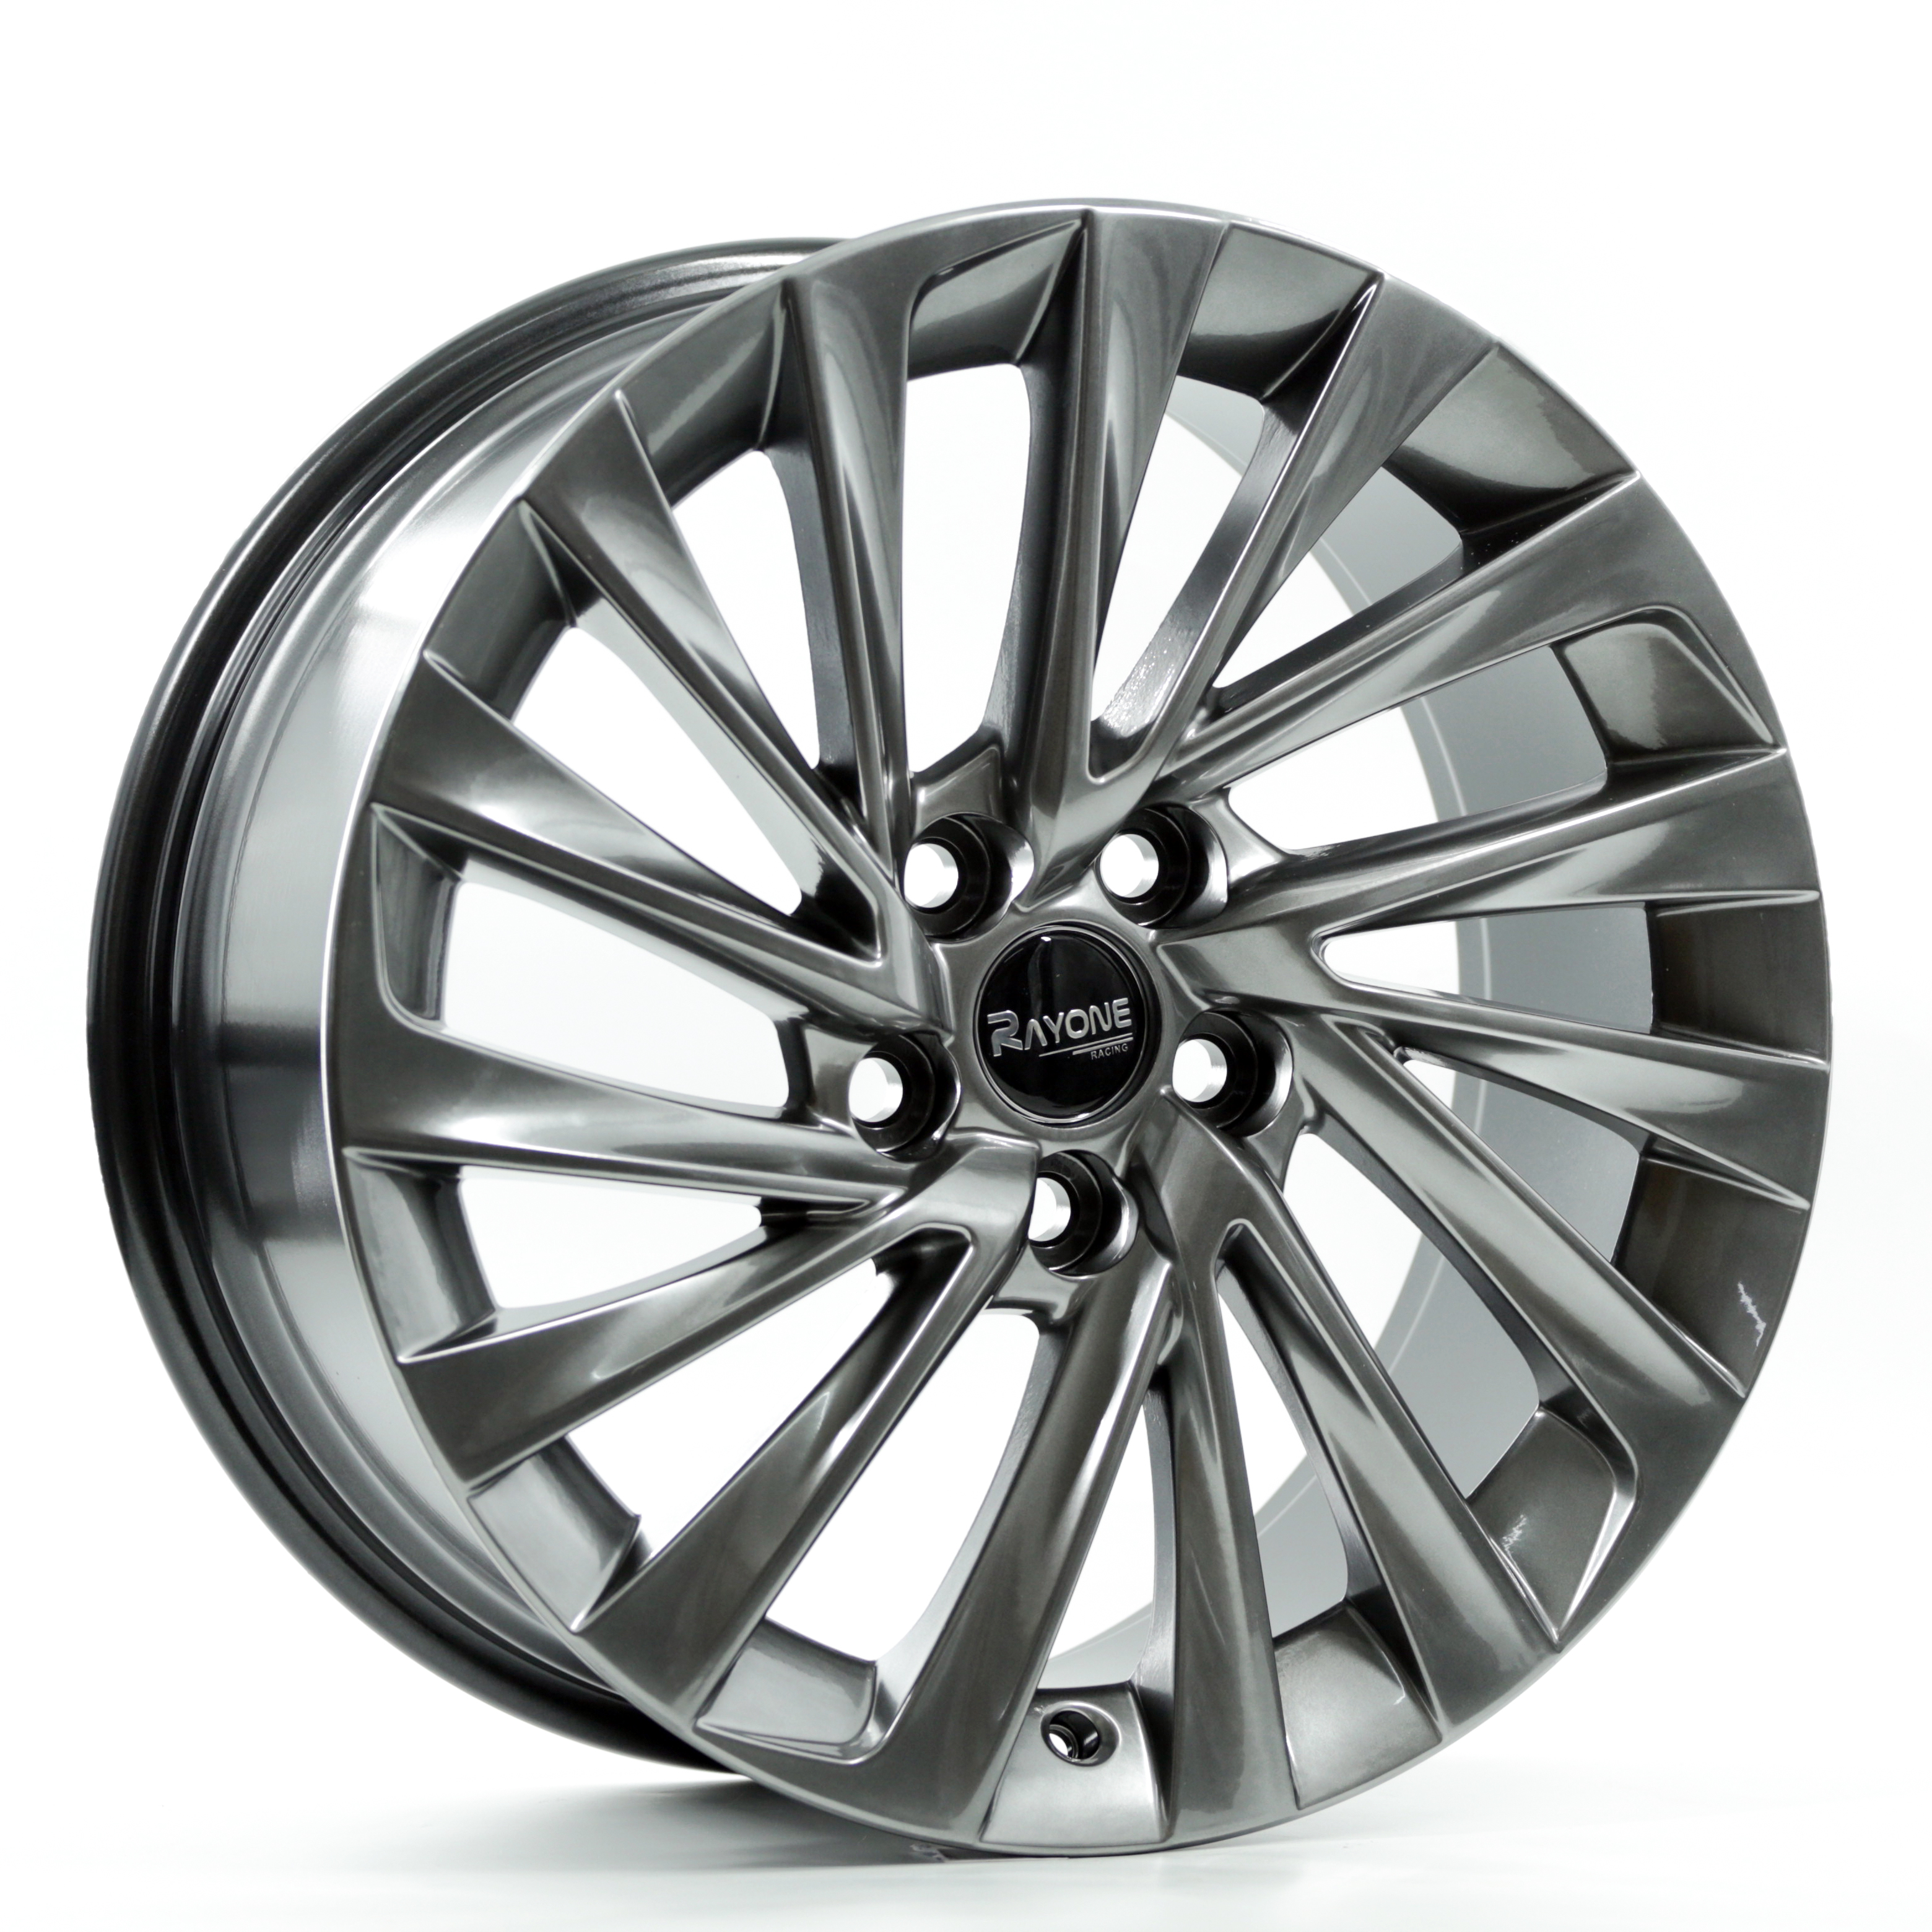 Hot Design Multi Spoke 5×114.3 Rims 18 Inch Alloy Wheels For Lexus Car